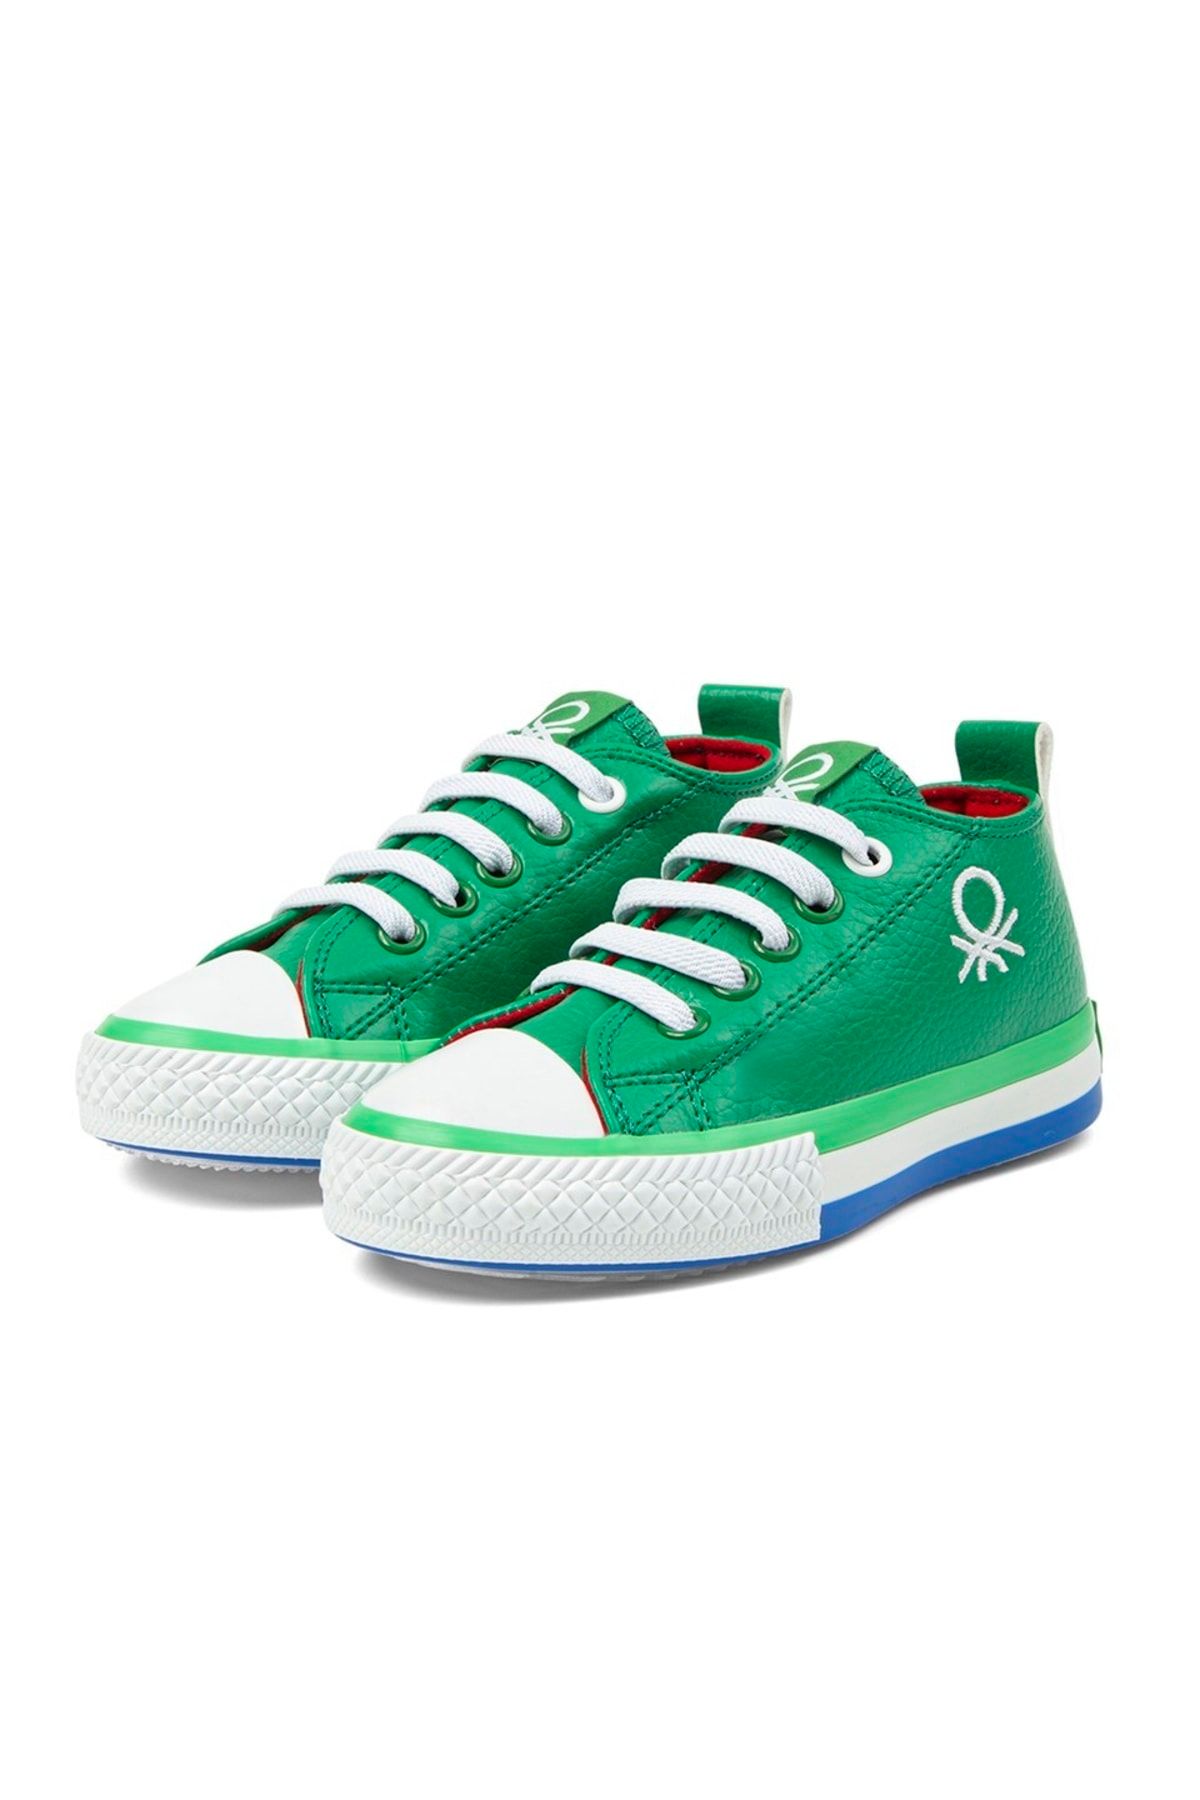 Benetton BN-30444 کفش ورزشی بچه گانه سبز